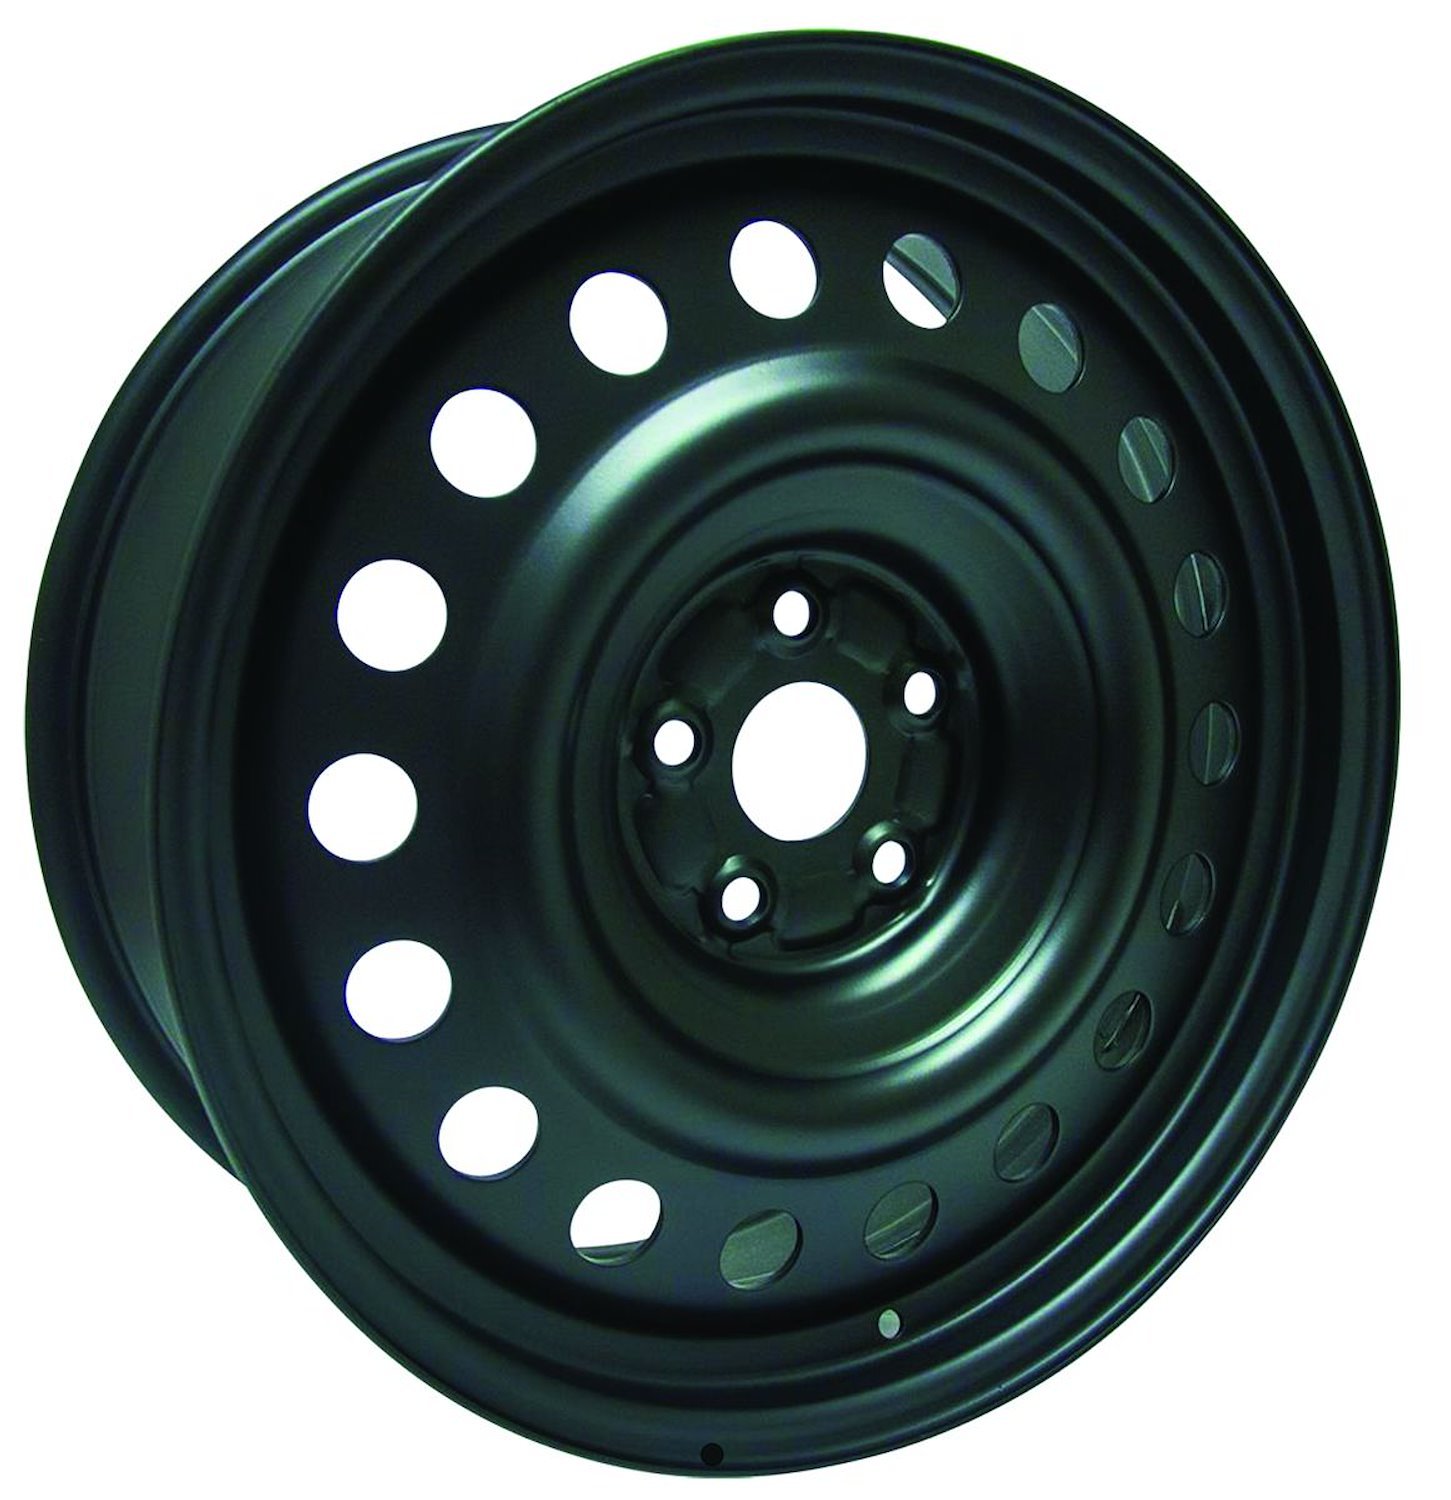 X49512 Steel Wheel [Size: 19" x 7.50"] Black Finish